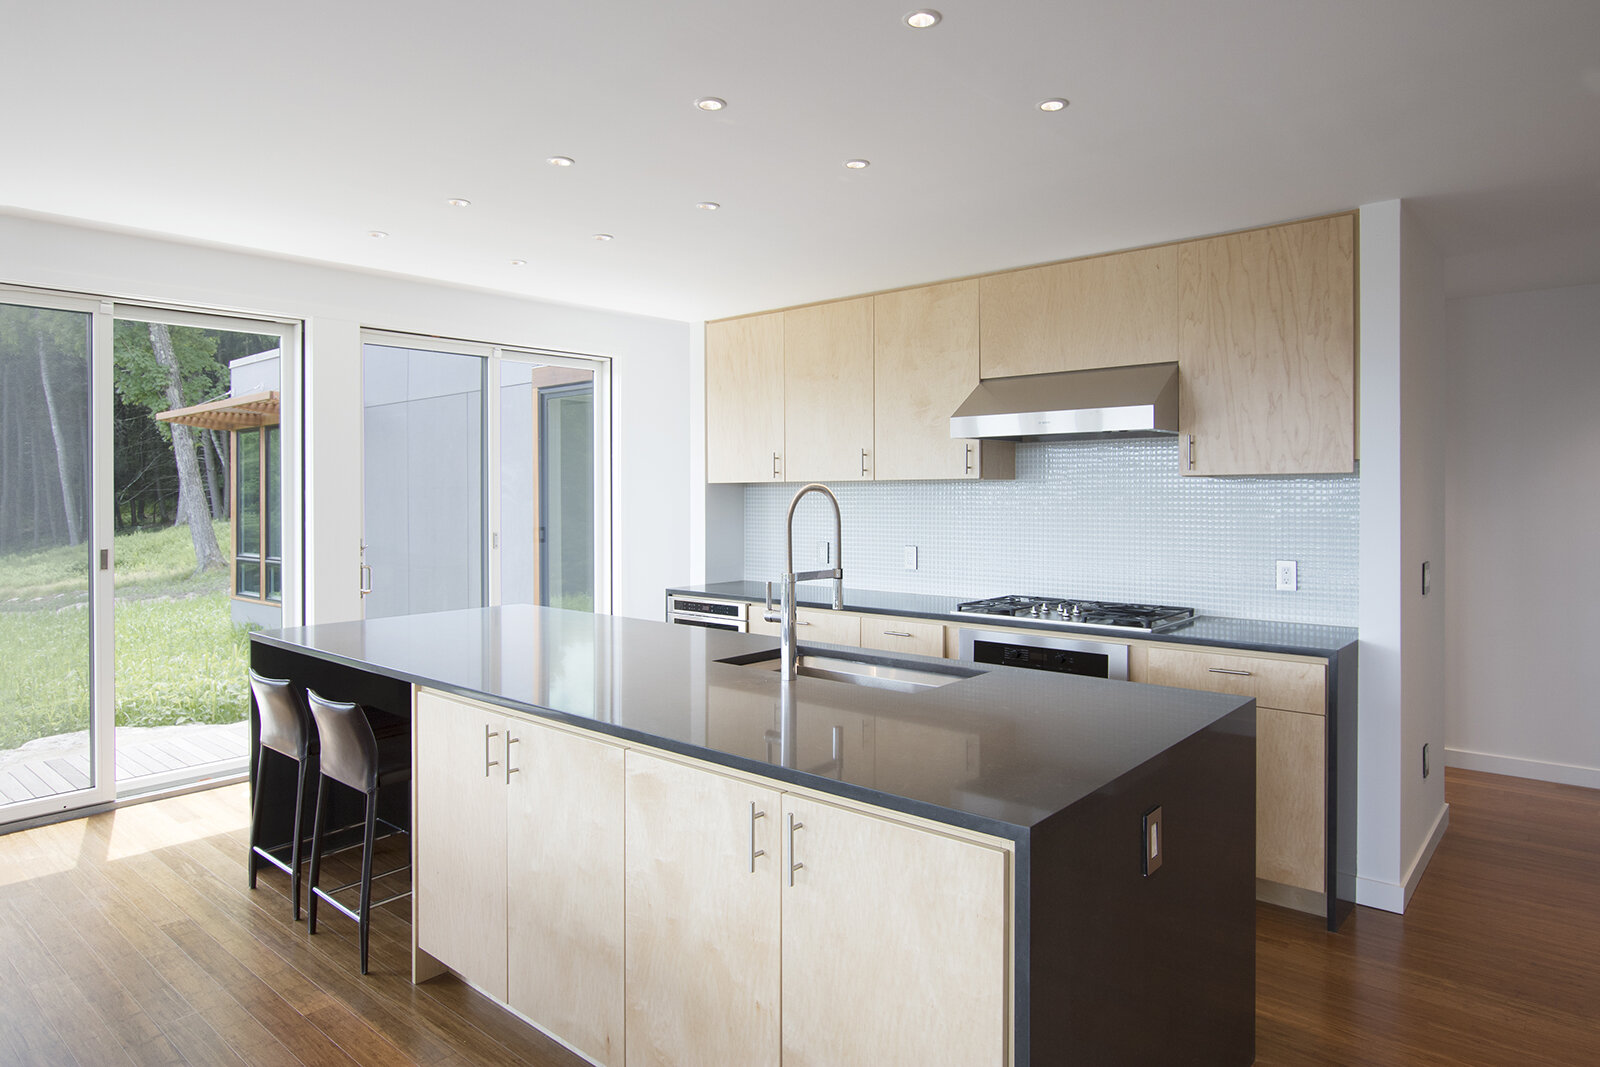 14-res4-re4a-resolution-4-architecture-modern-modular-prefab-sharon residence-interior-kitchen-island.jpg